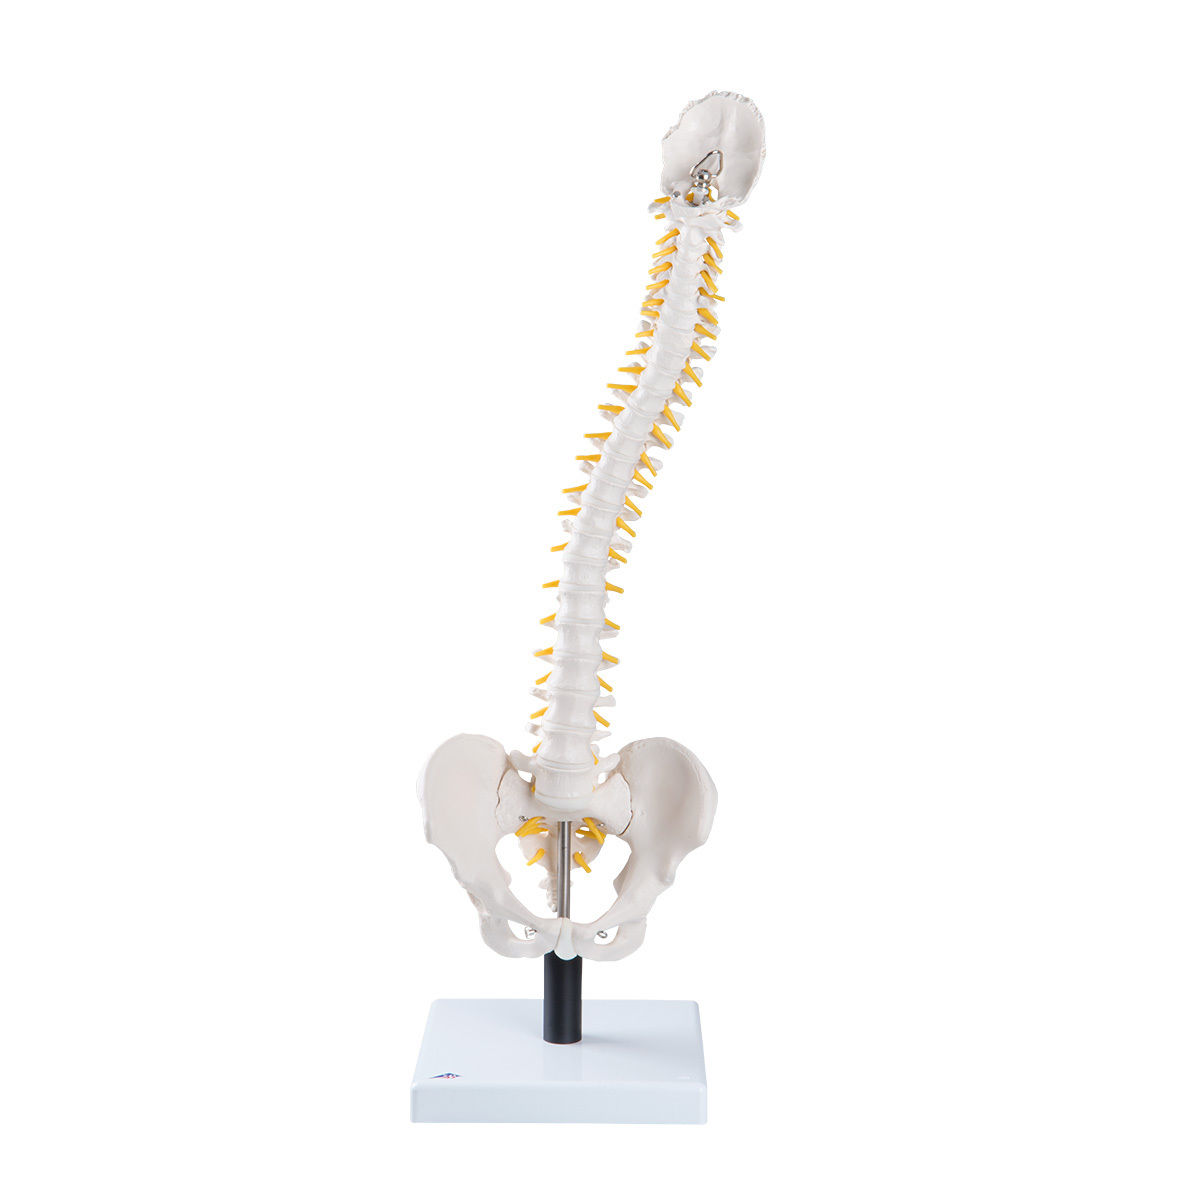 [3B] VB84 척추측만증 디스크모형 /Flexible Spine Model with Soft Intervertebral Discs